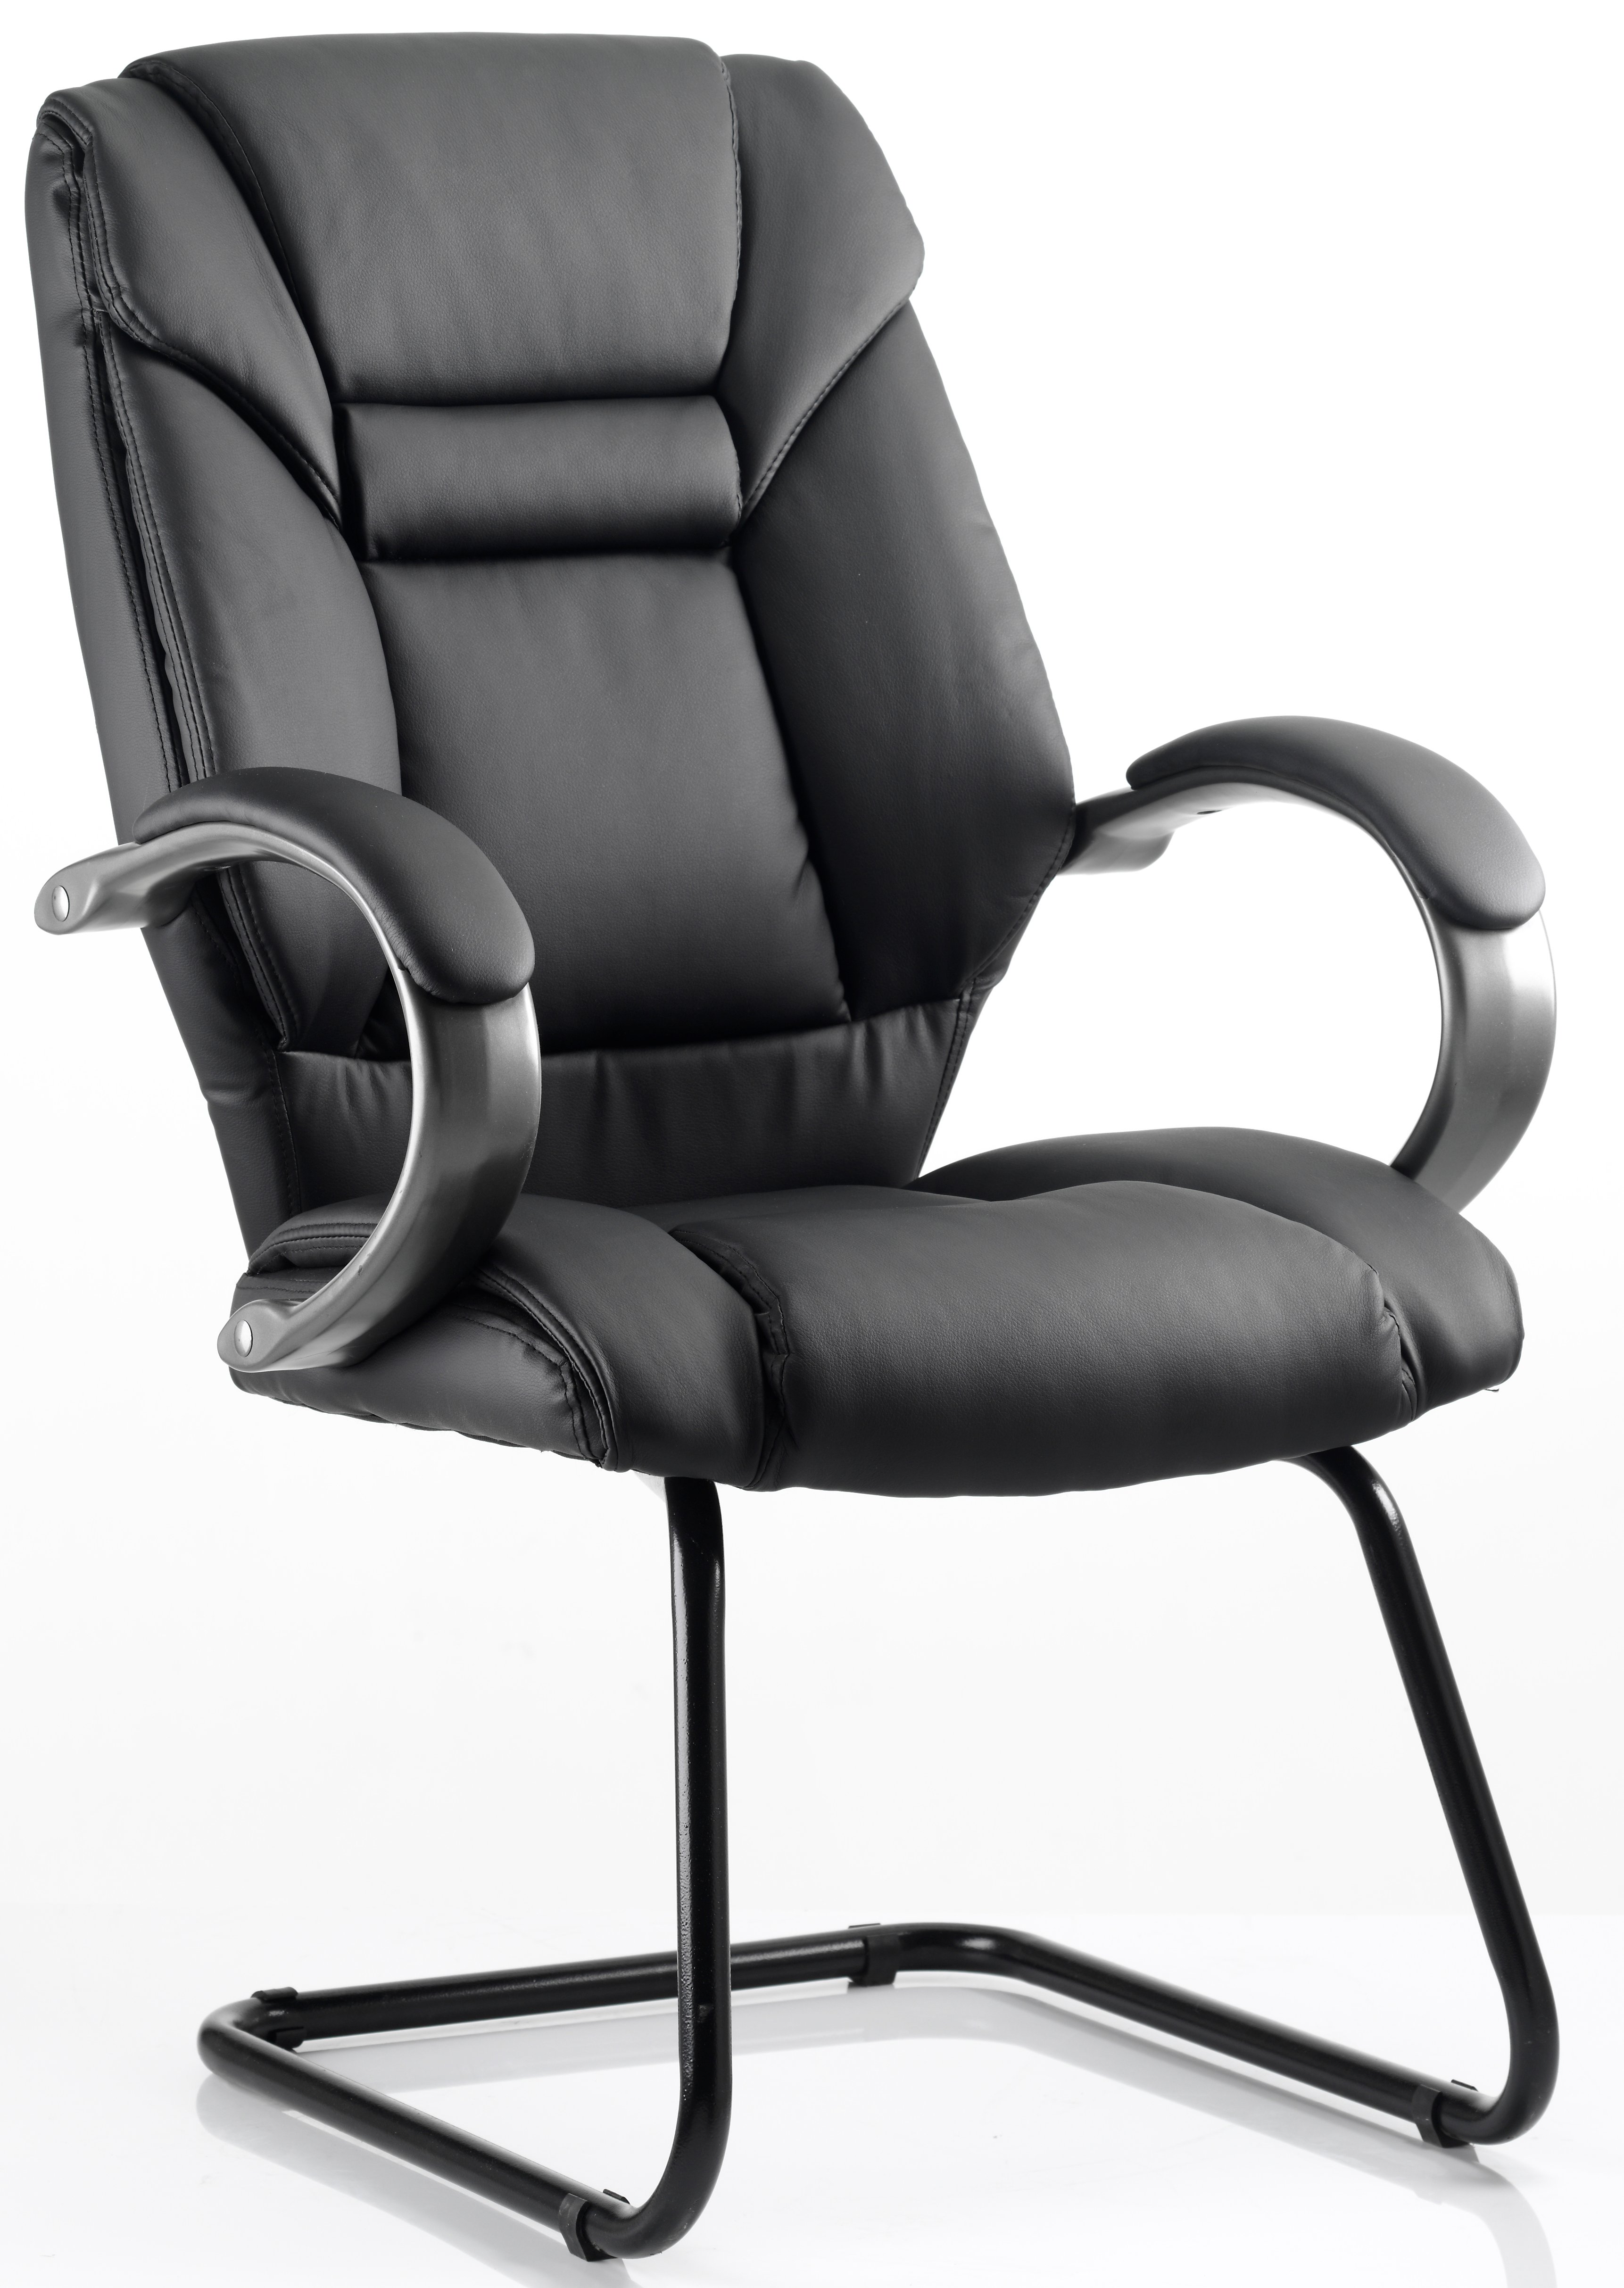 Garvi cantilever frame black bonded leather chair